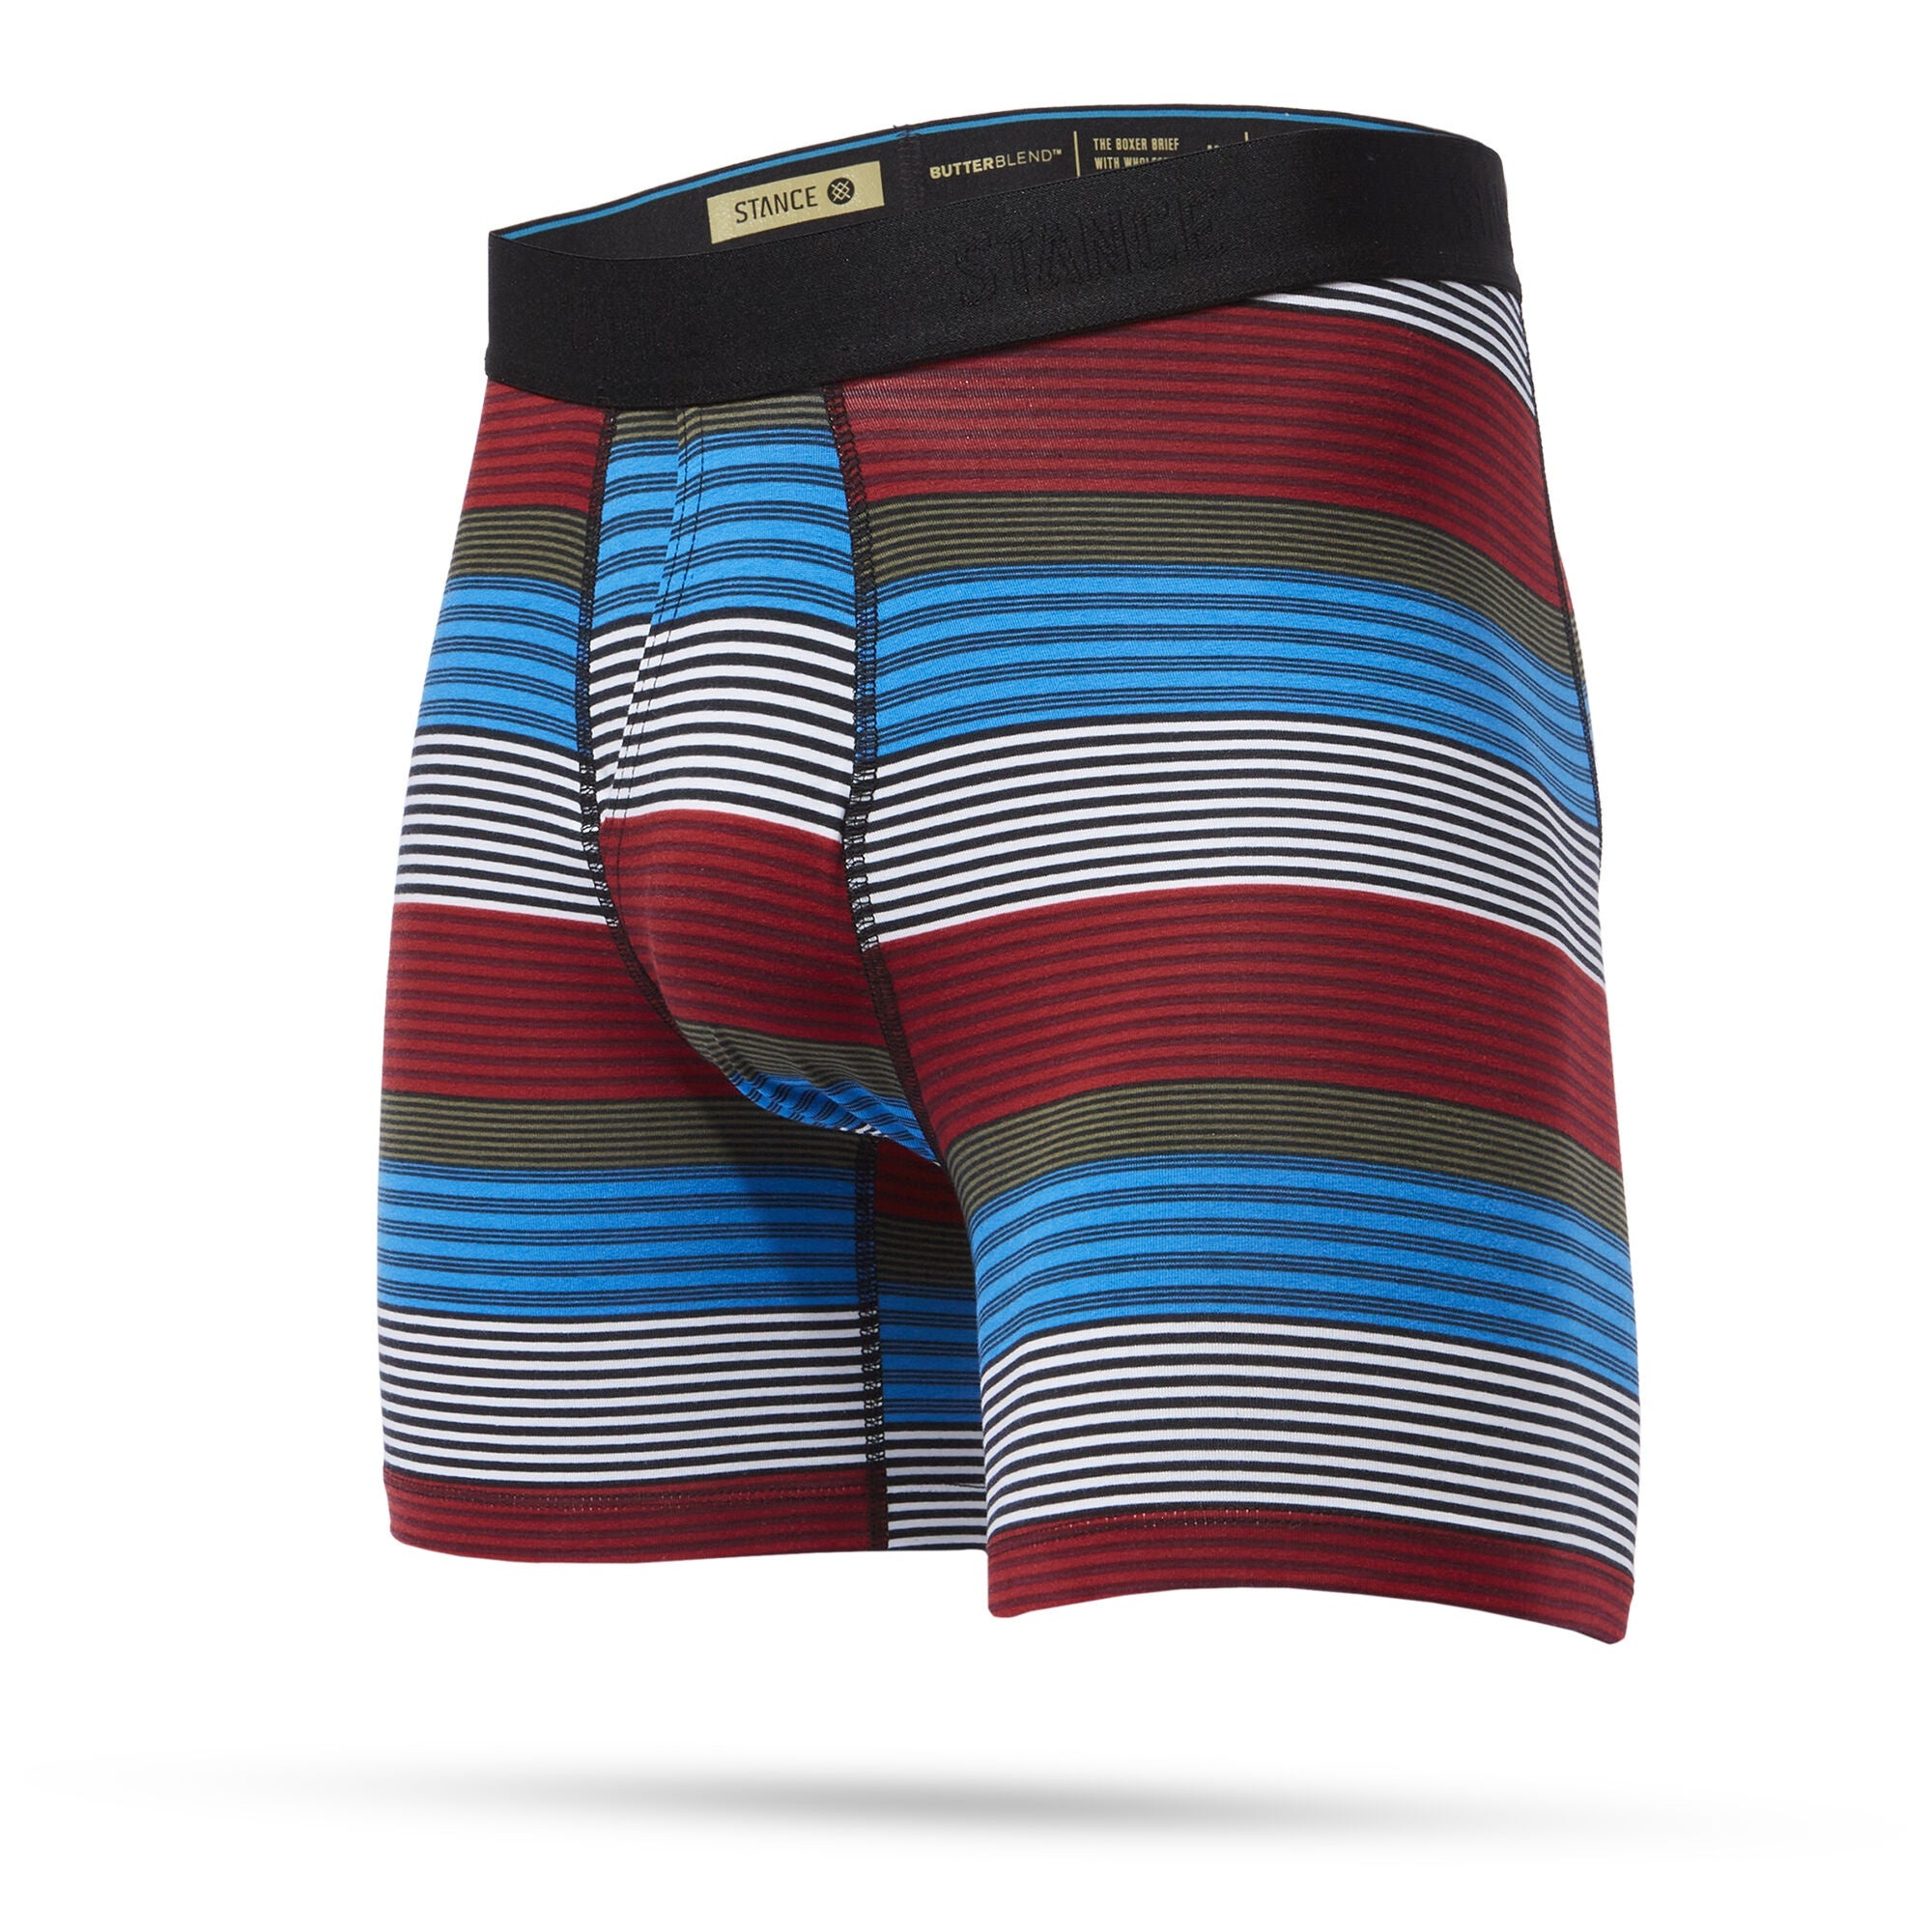 Stance boxer shorts men's black color buy on PRM